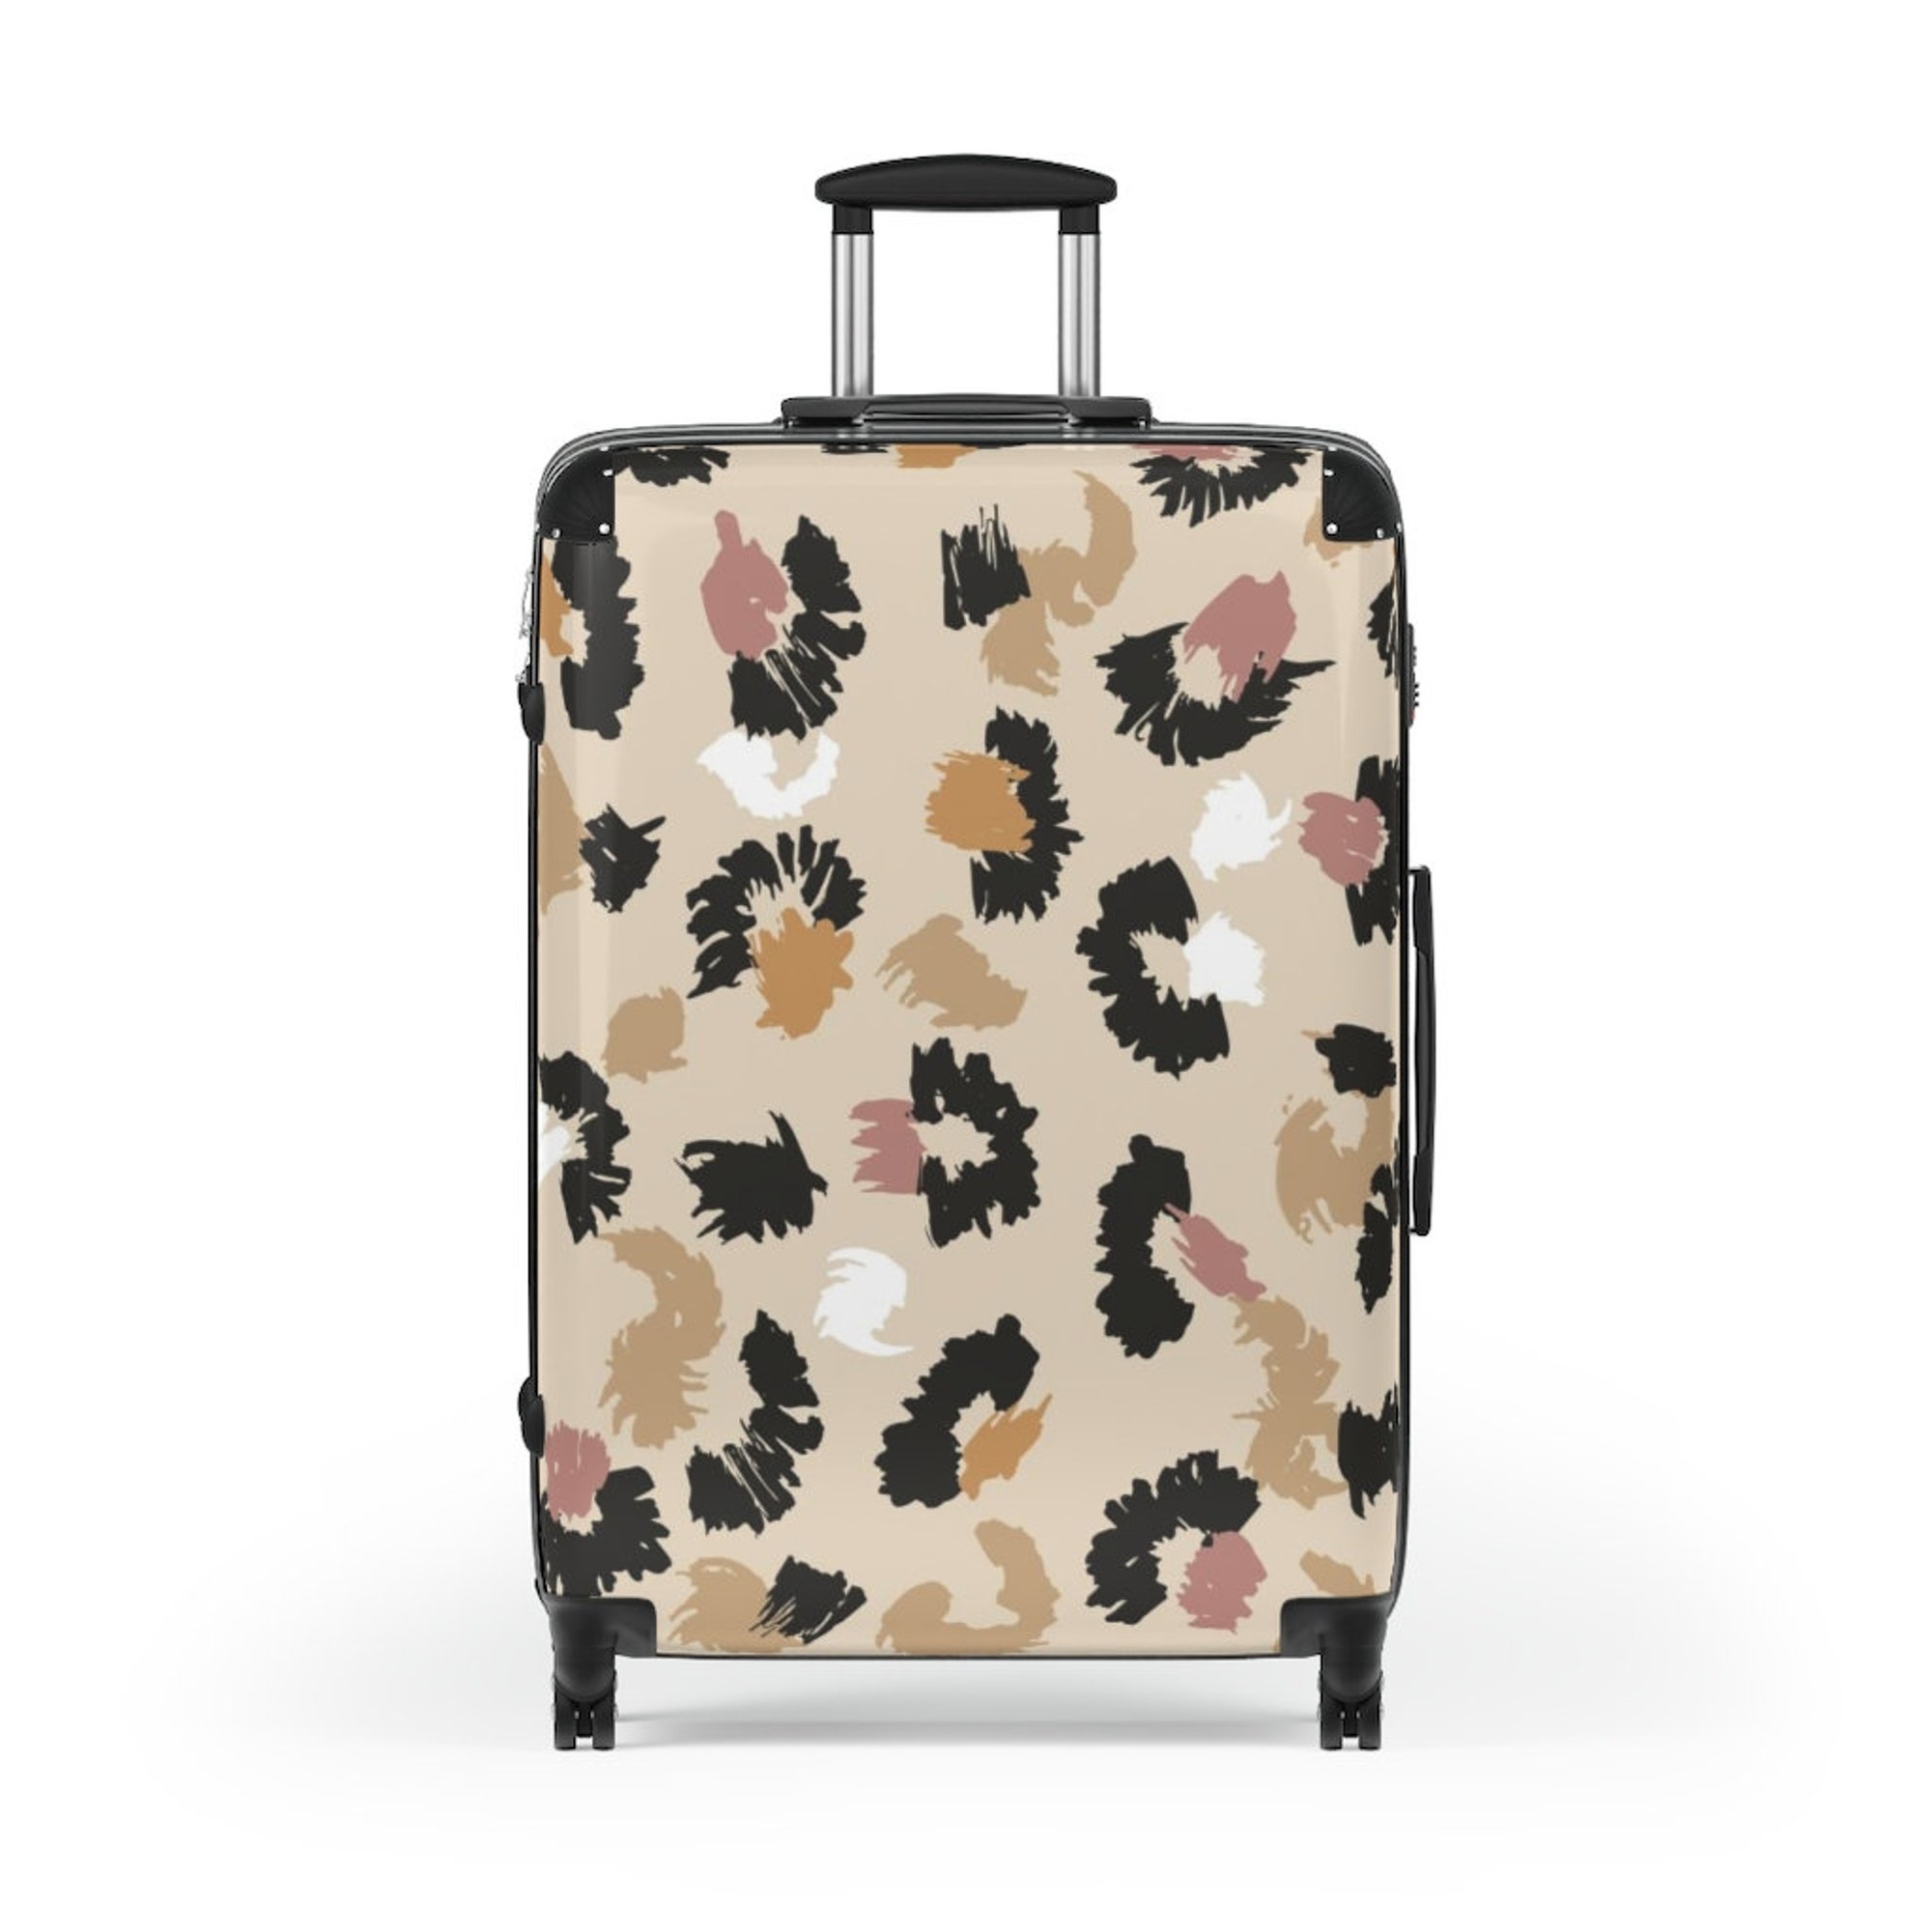 Discover The Keita Suitcase